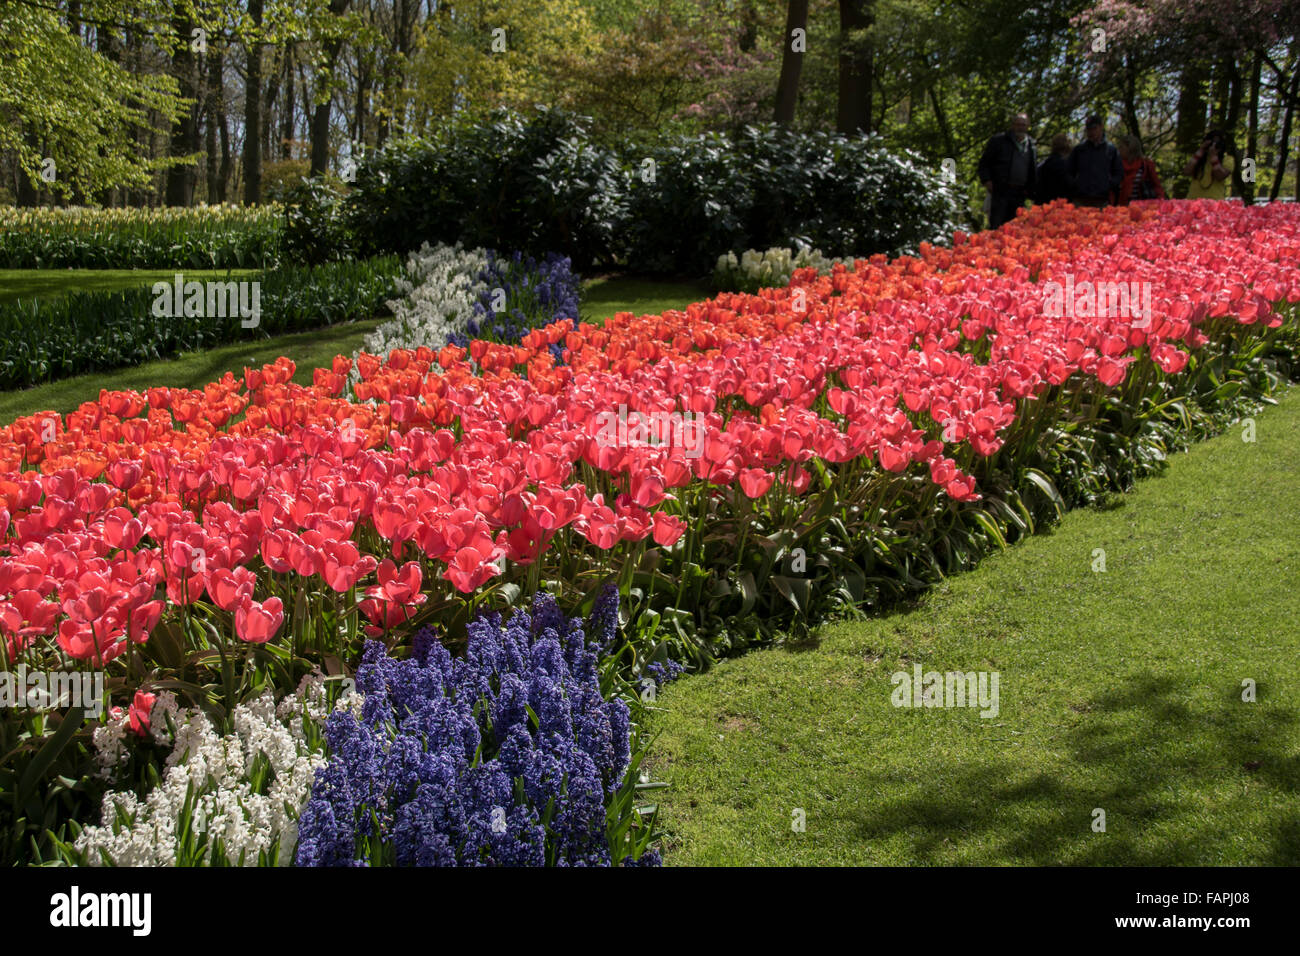 Bellissime aiuole composte con tulipani e giacinti soltanto. Foto Stock